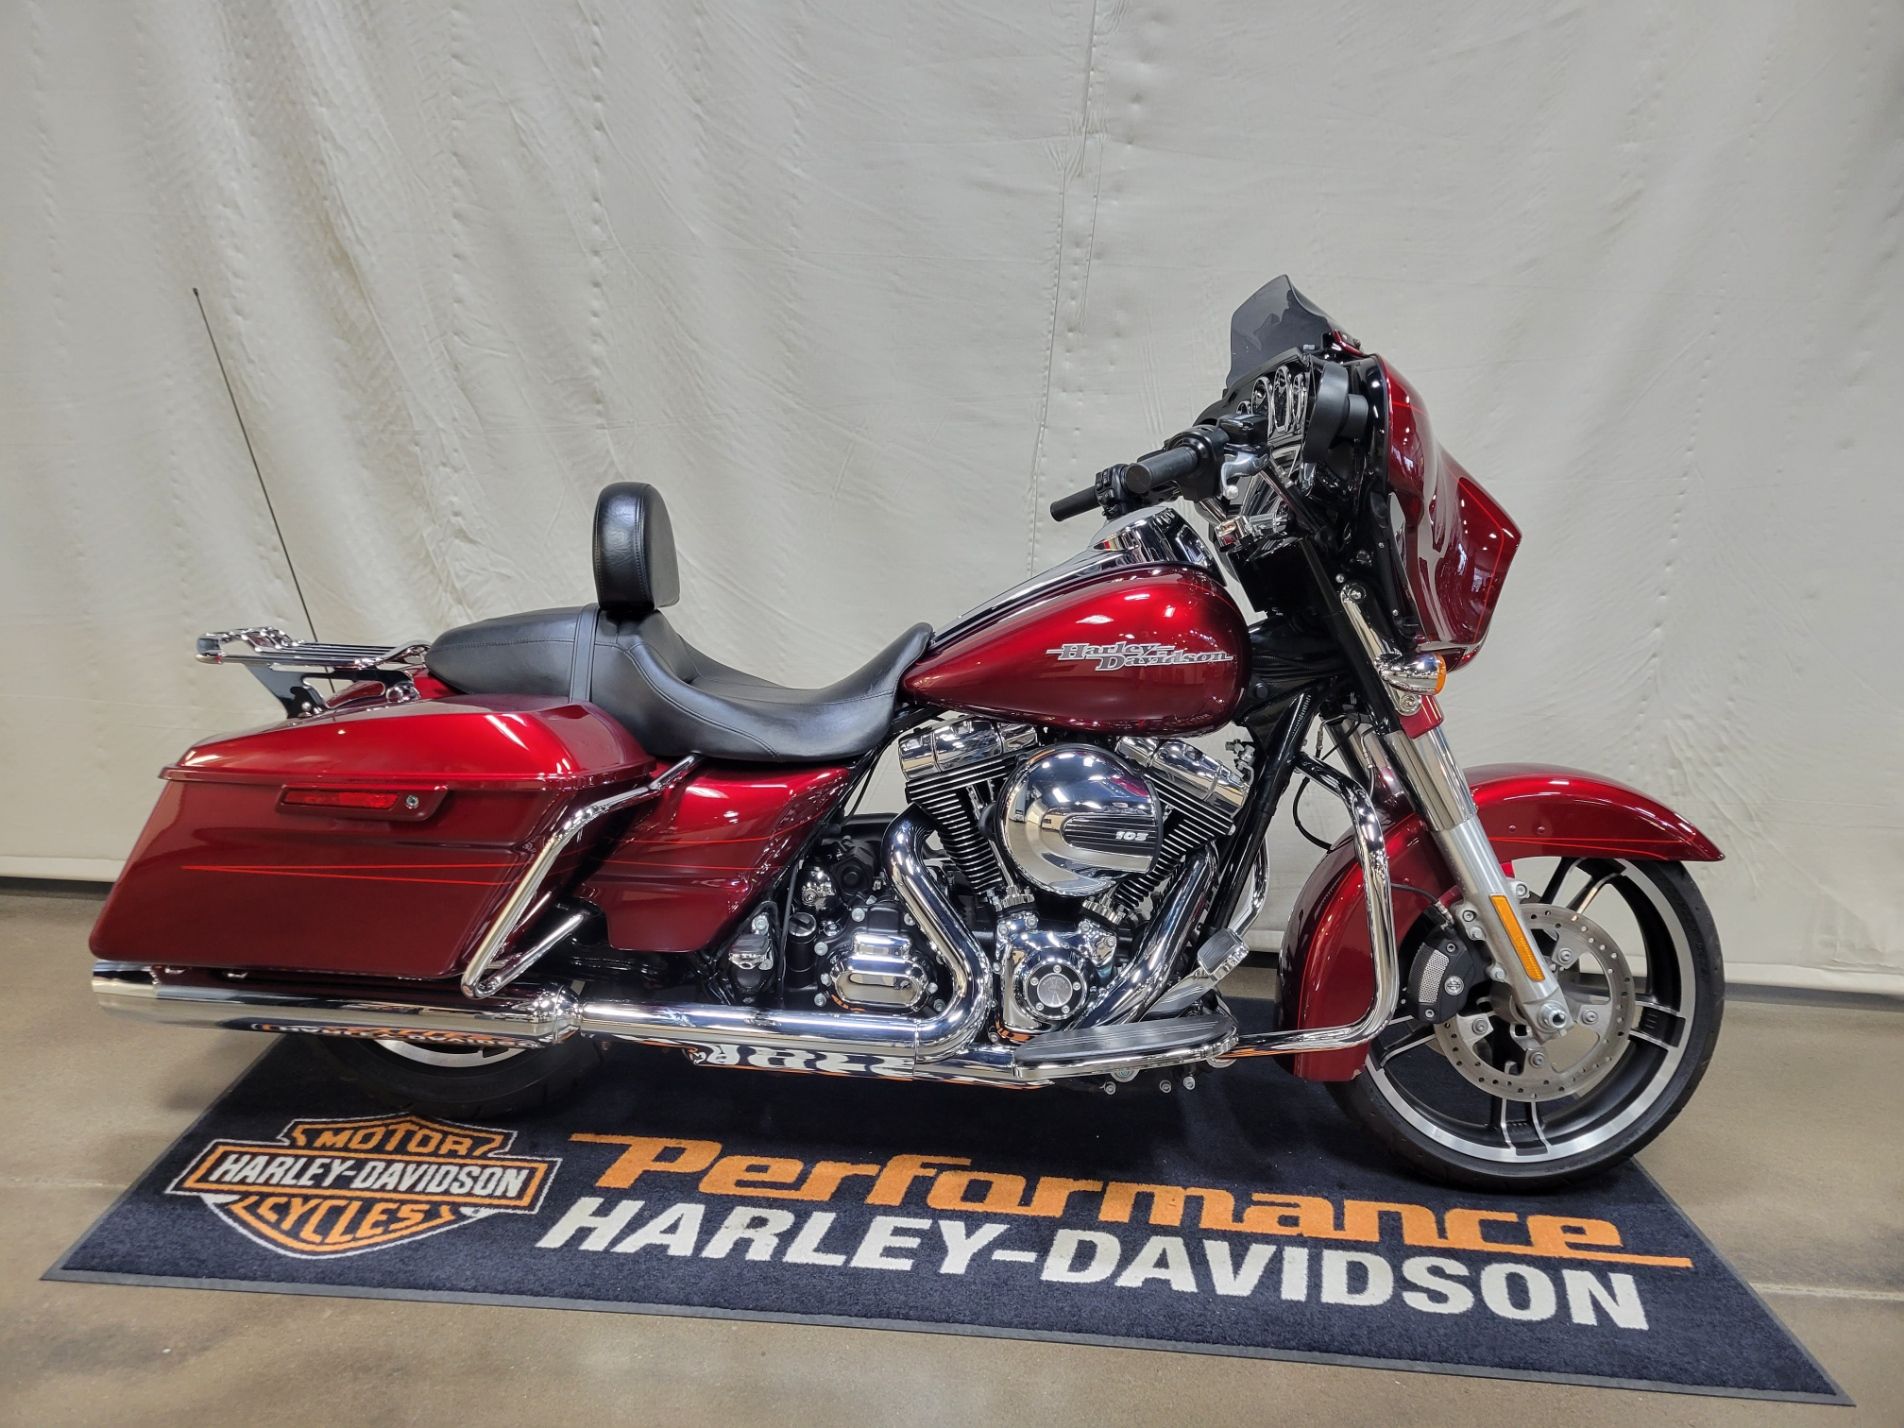 2016 Harley-Davidson Street Glide® Special in Syracuse, New York - Photo 1